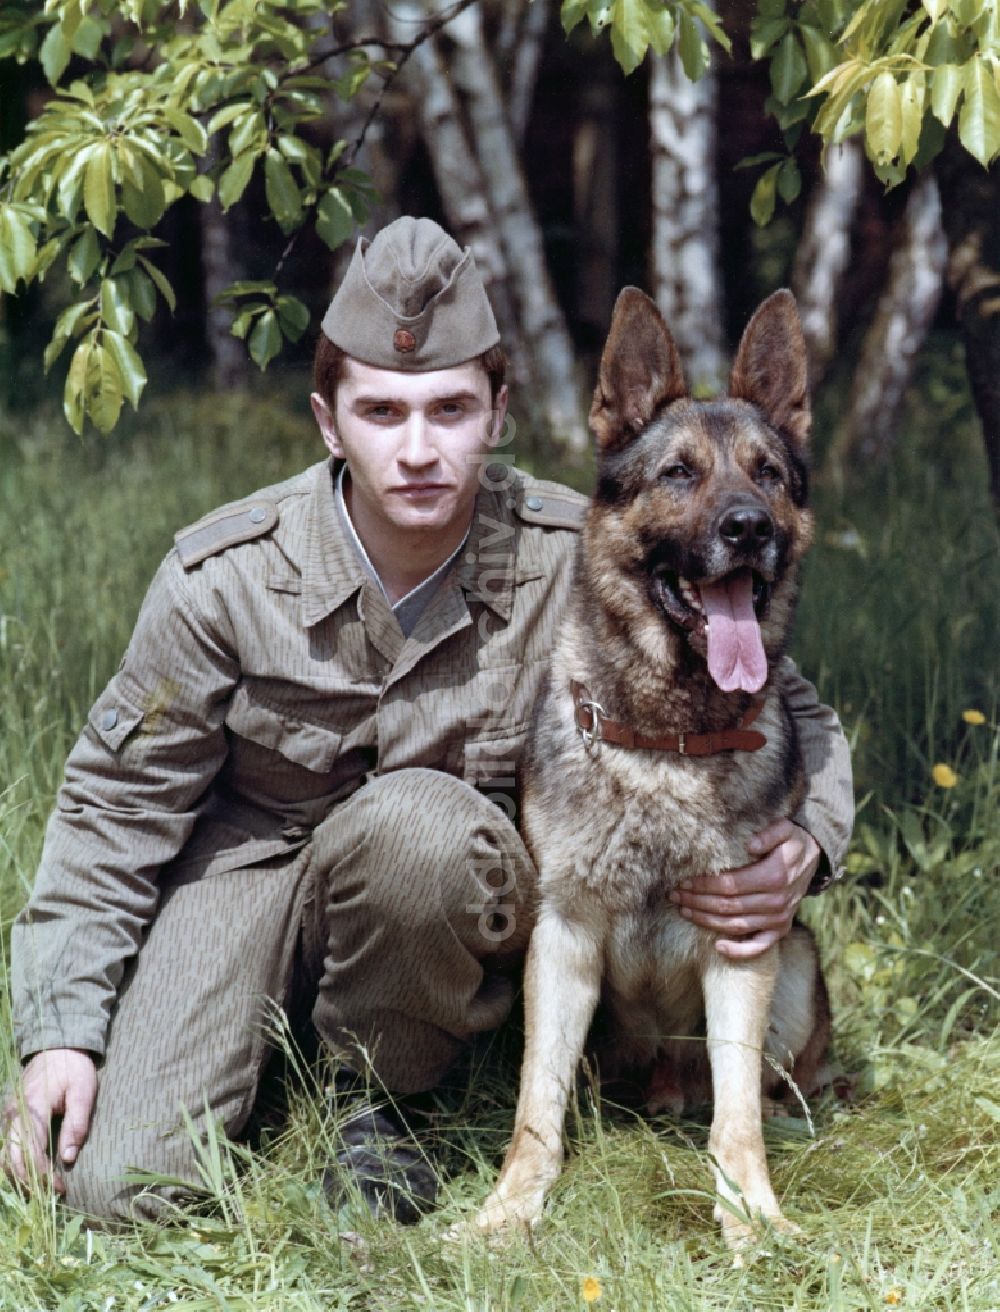 Abbenrode: Wachhundeausbildung durch Soldaten der Grenztruppen der DDR